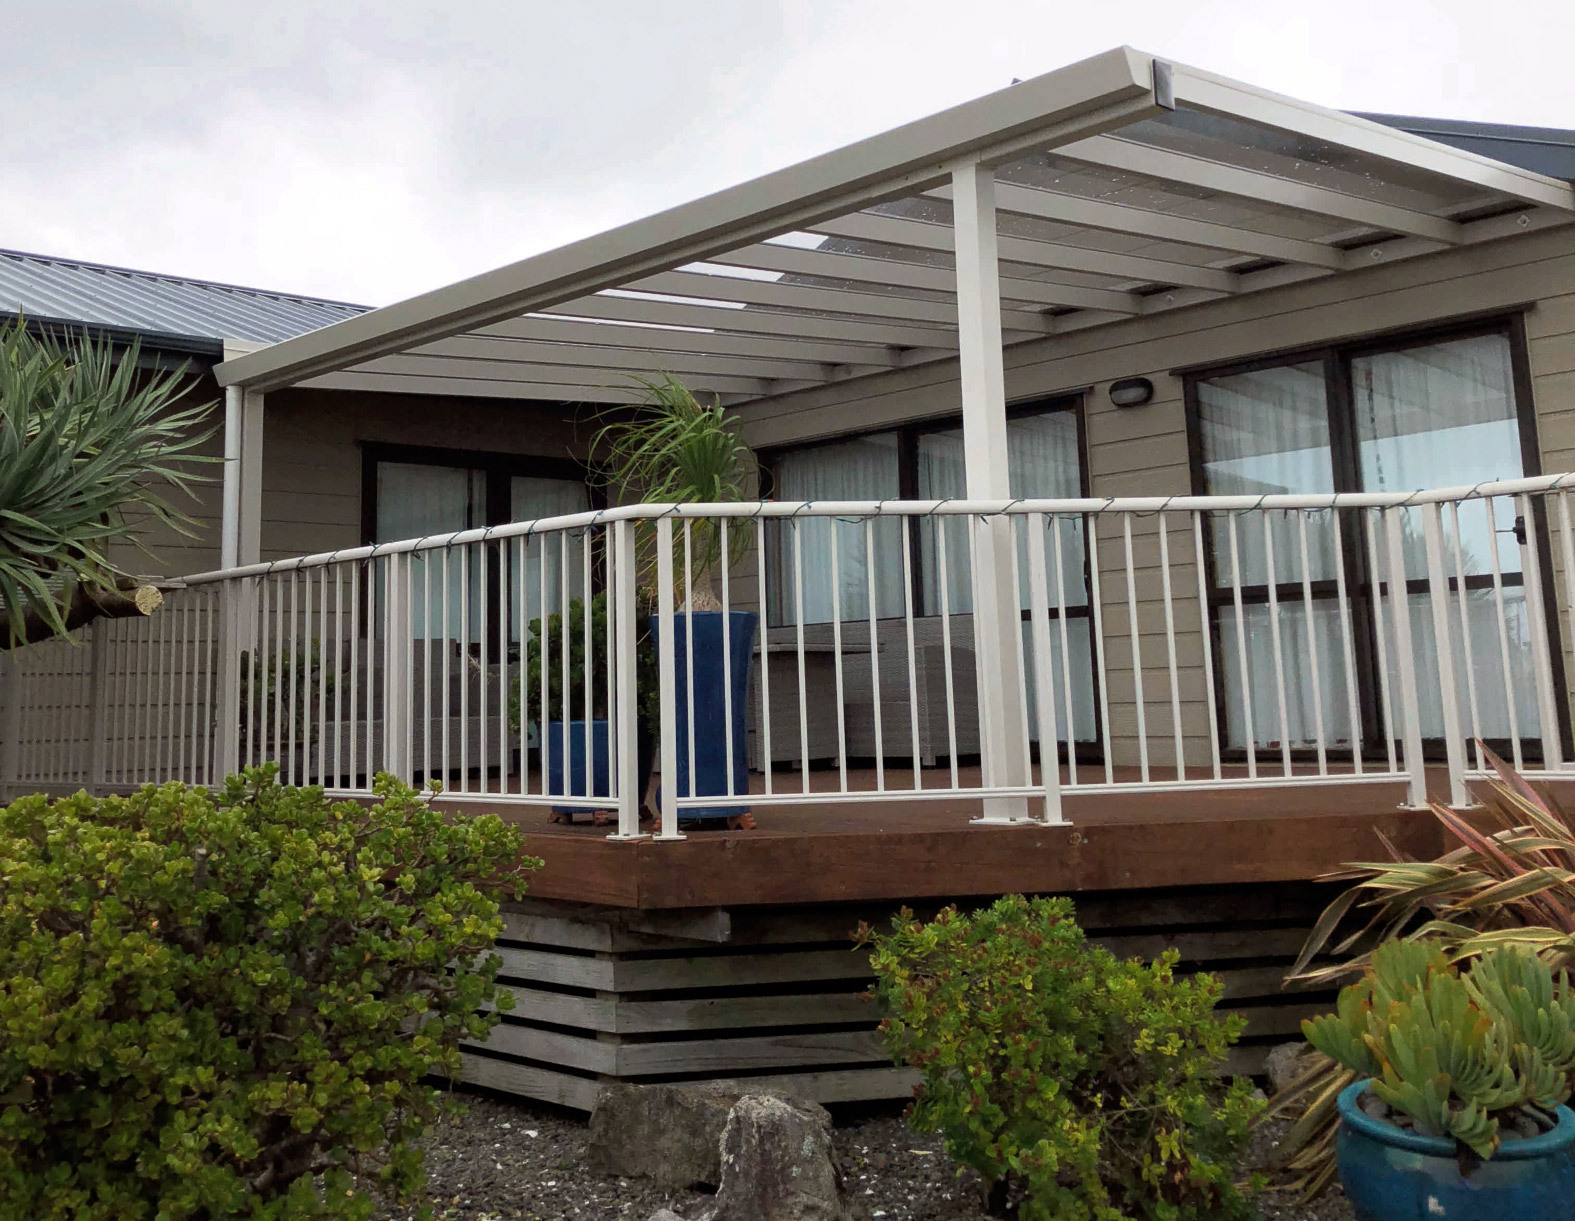 SUNVUE New Zealand - Your pergola, carport & canopy experts